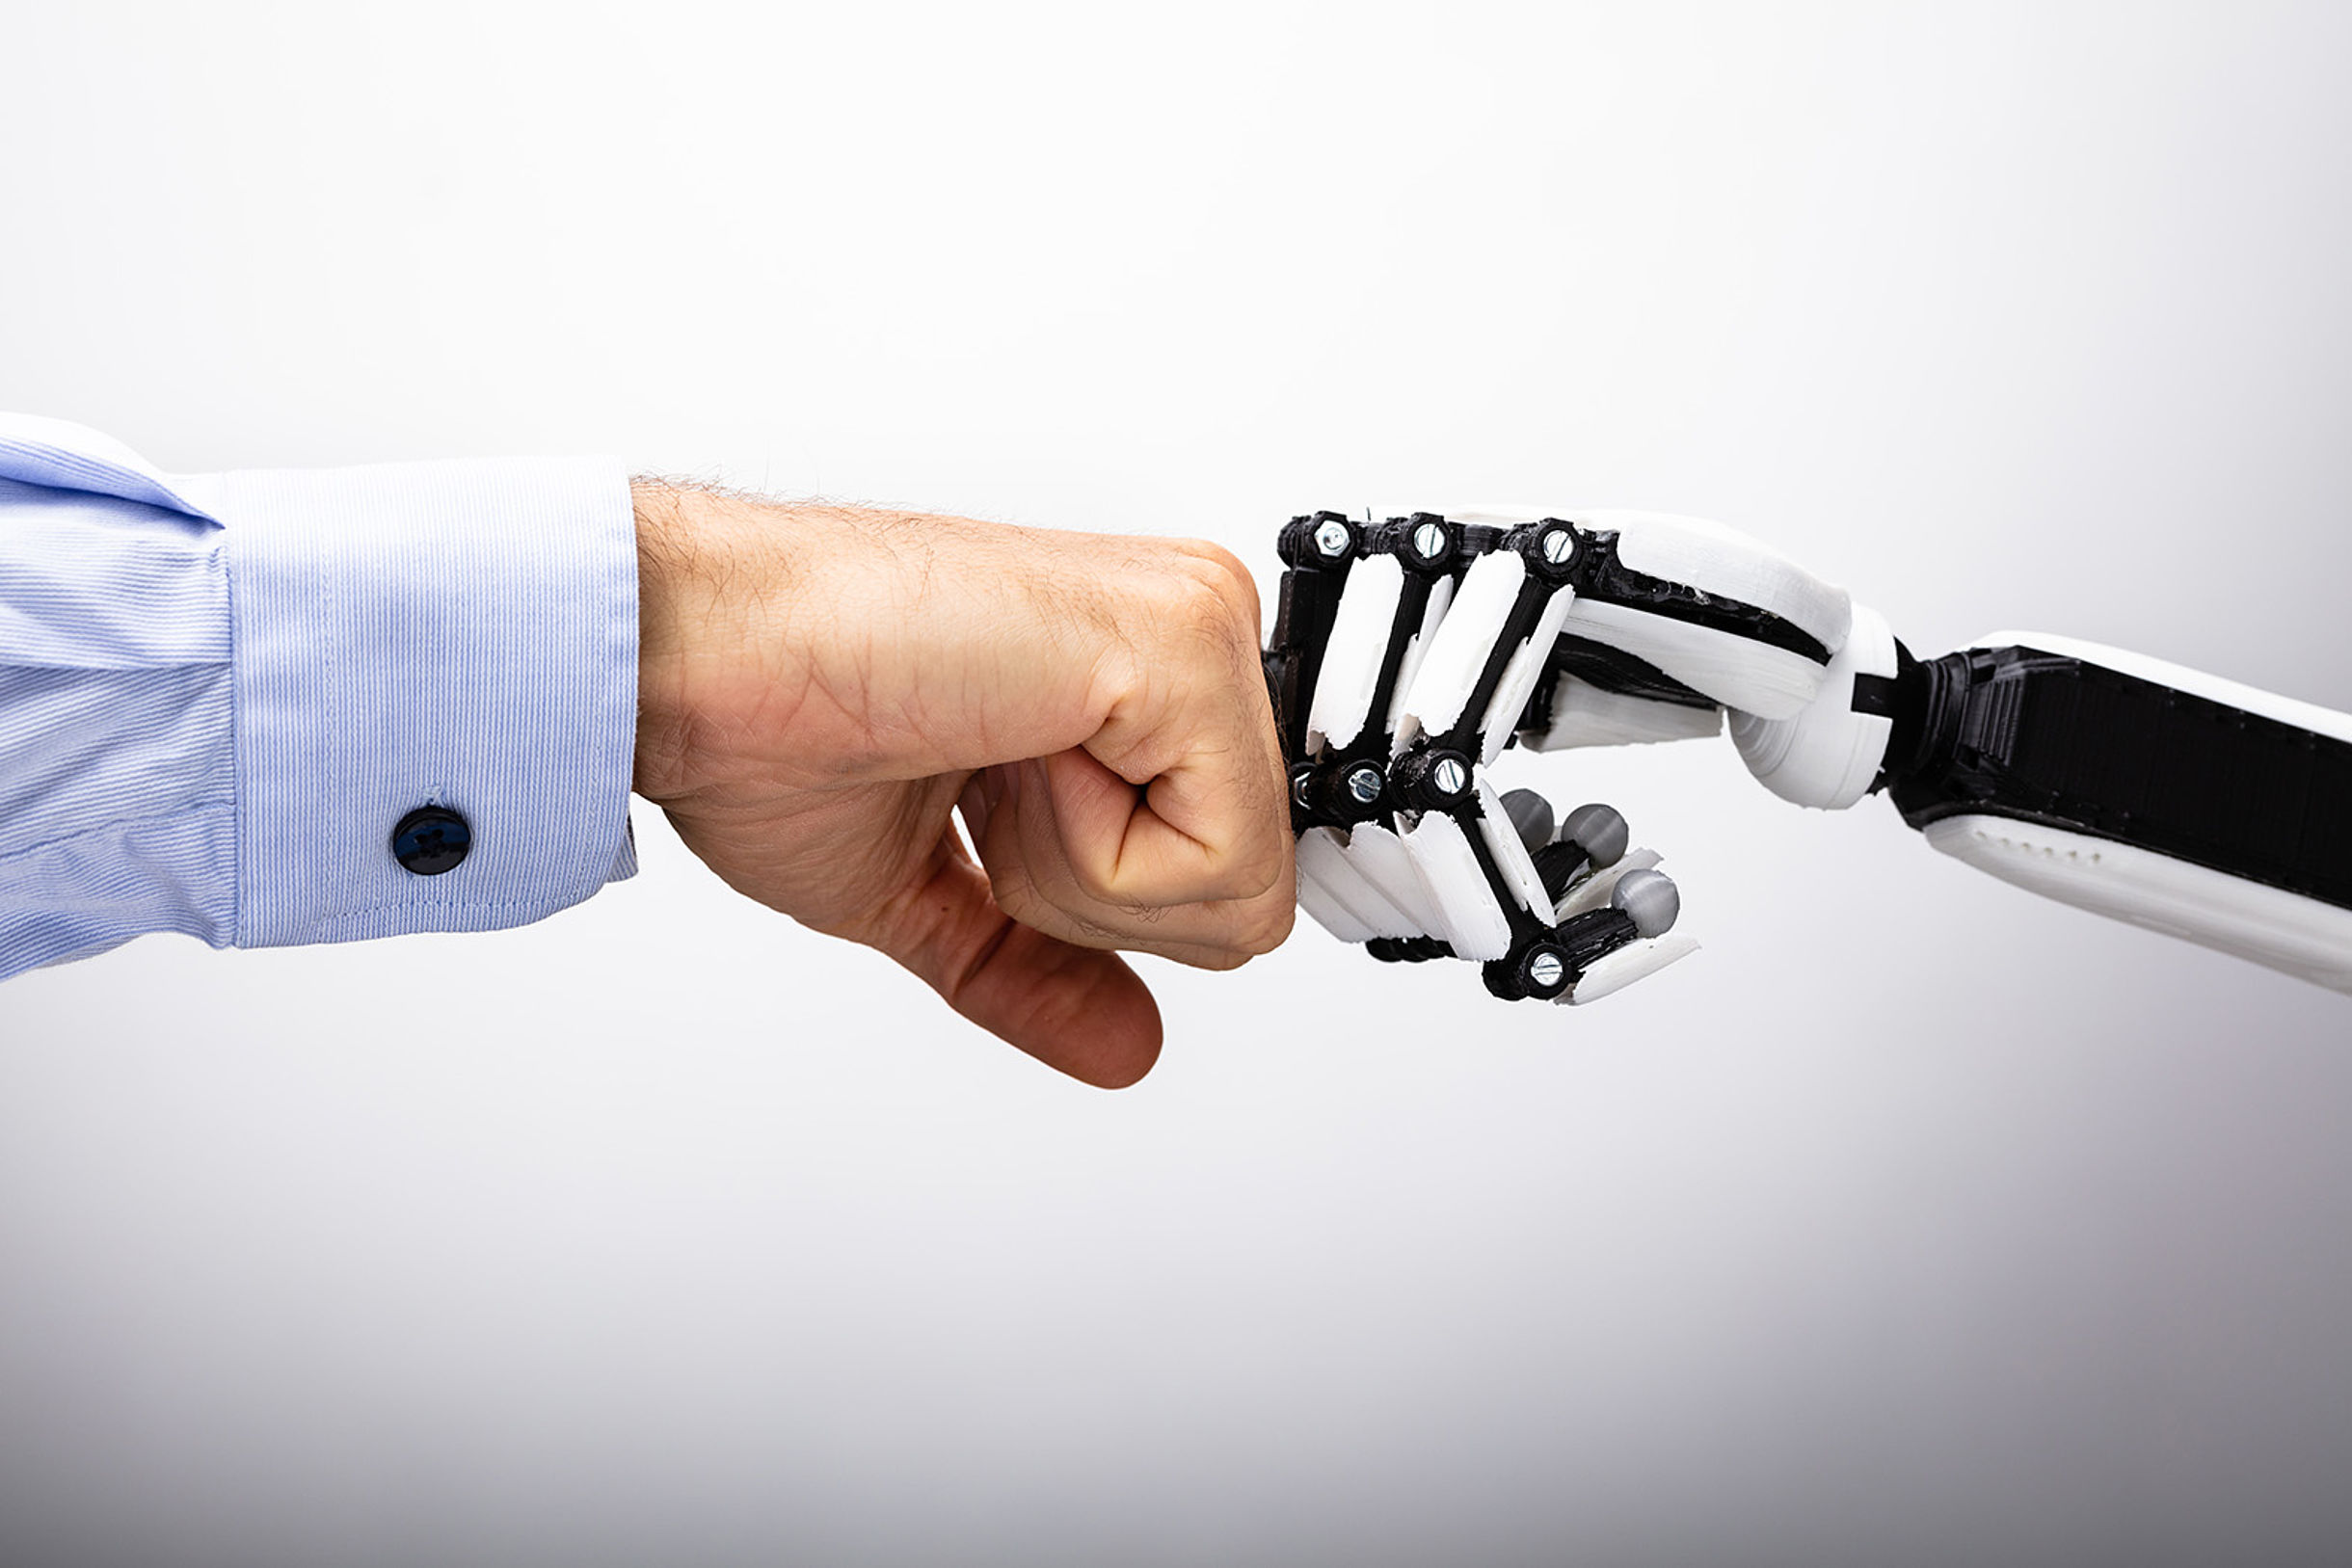 Greeting between human and robot